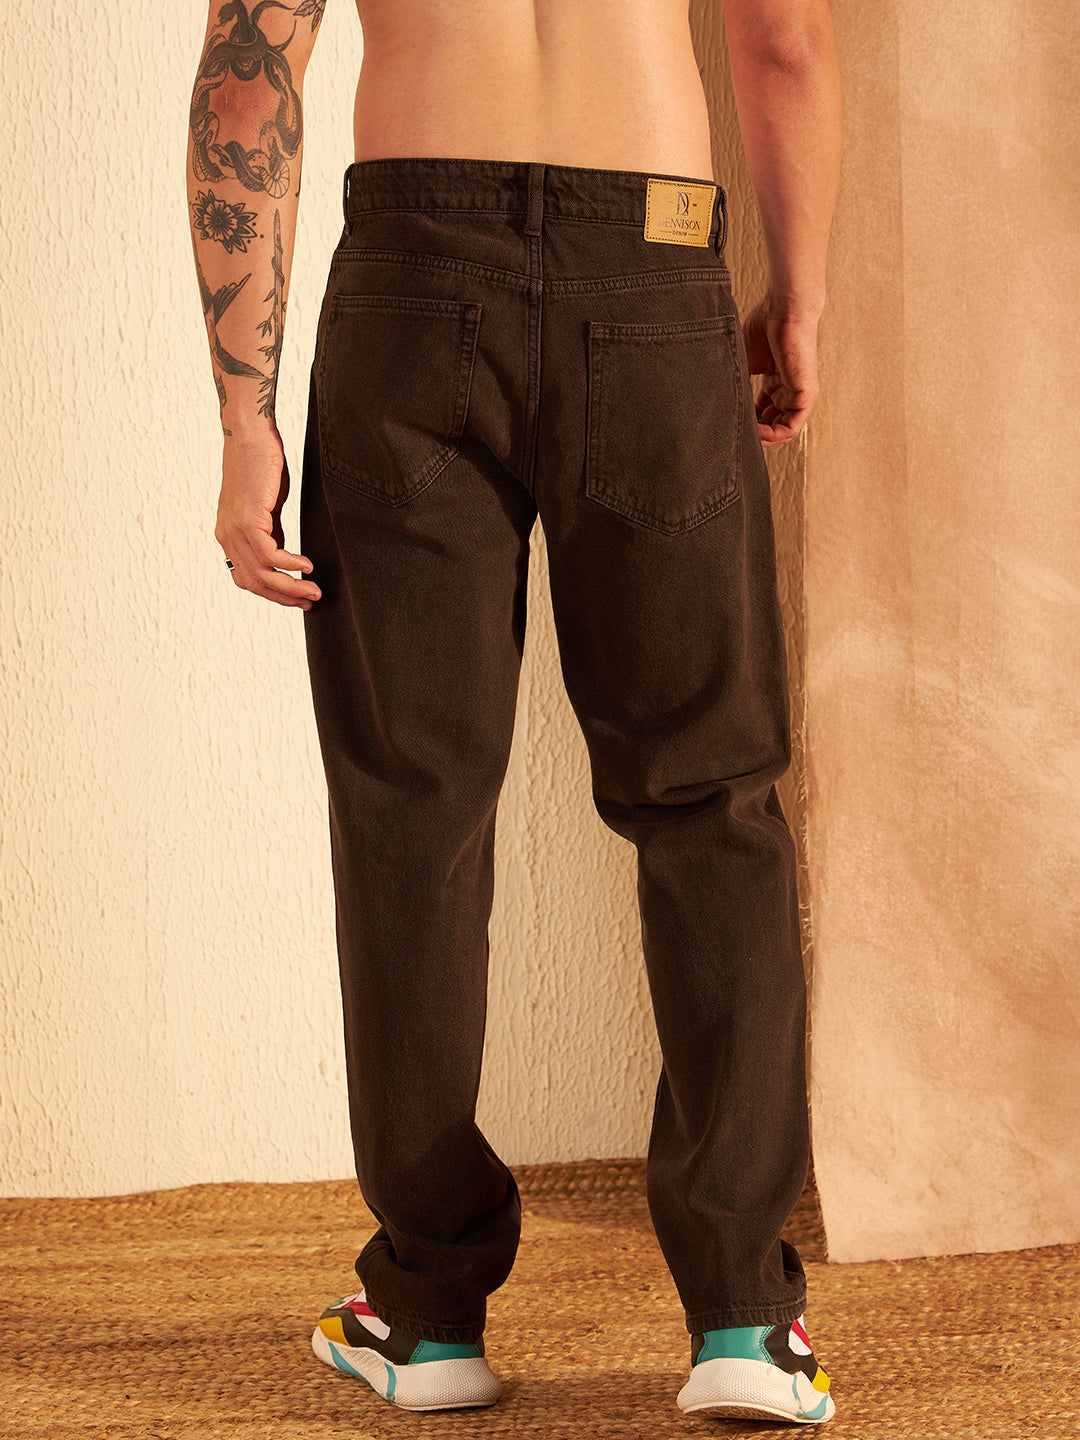 Ben Martin Men's Casual Regular Fit Dark Blue Brown Tint Denim Jeans Size  30 : Amazon.in: Clothing & Accessories